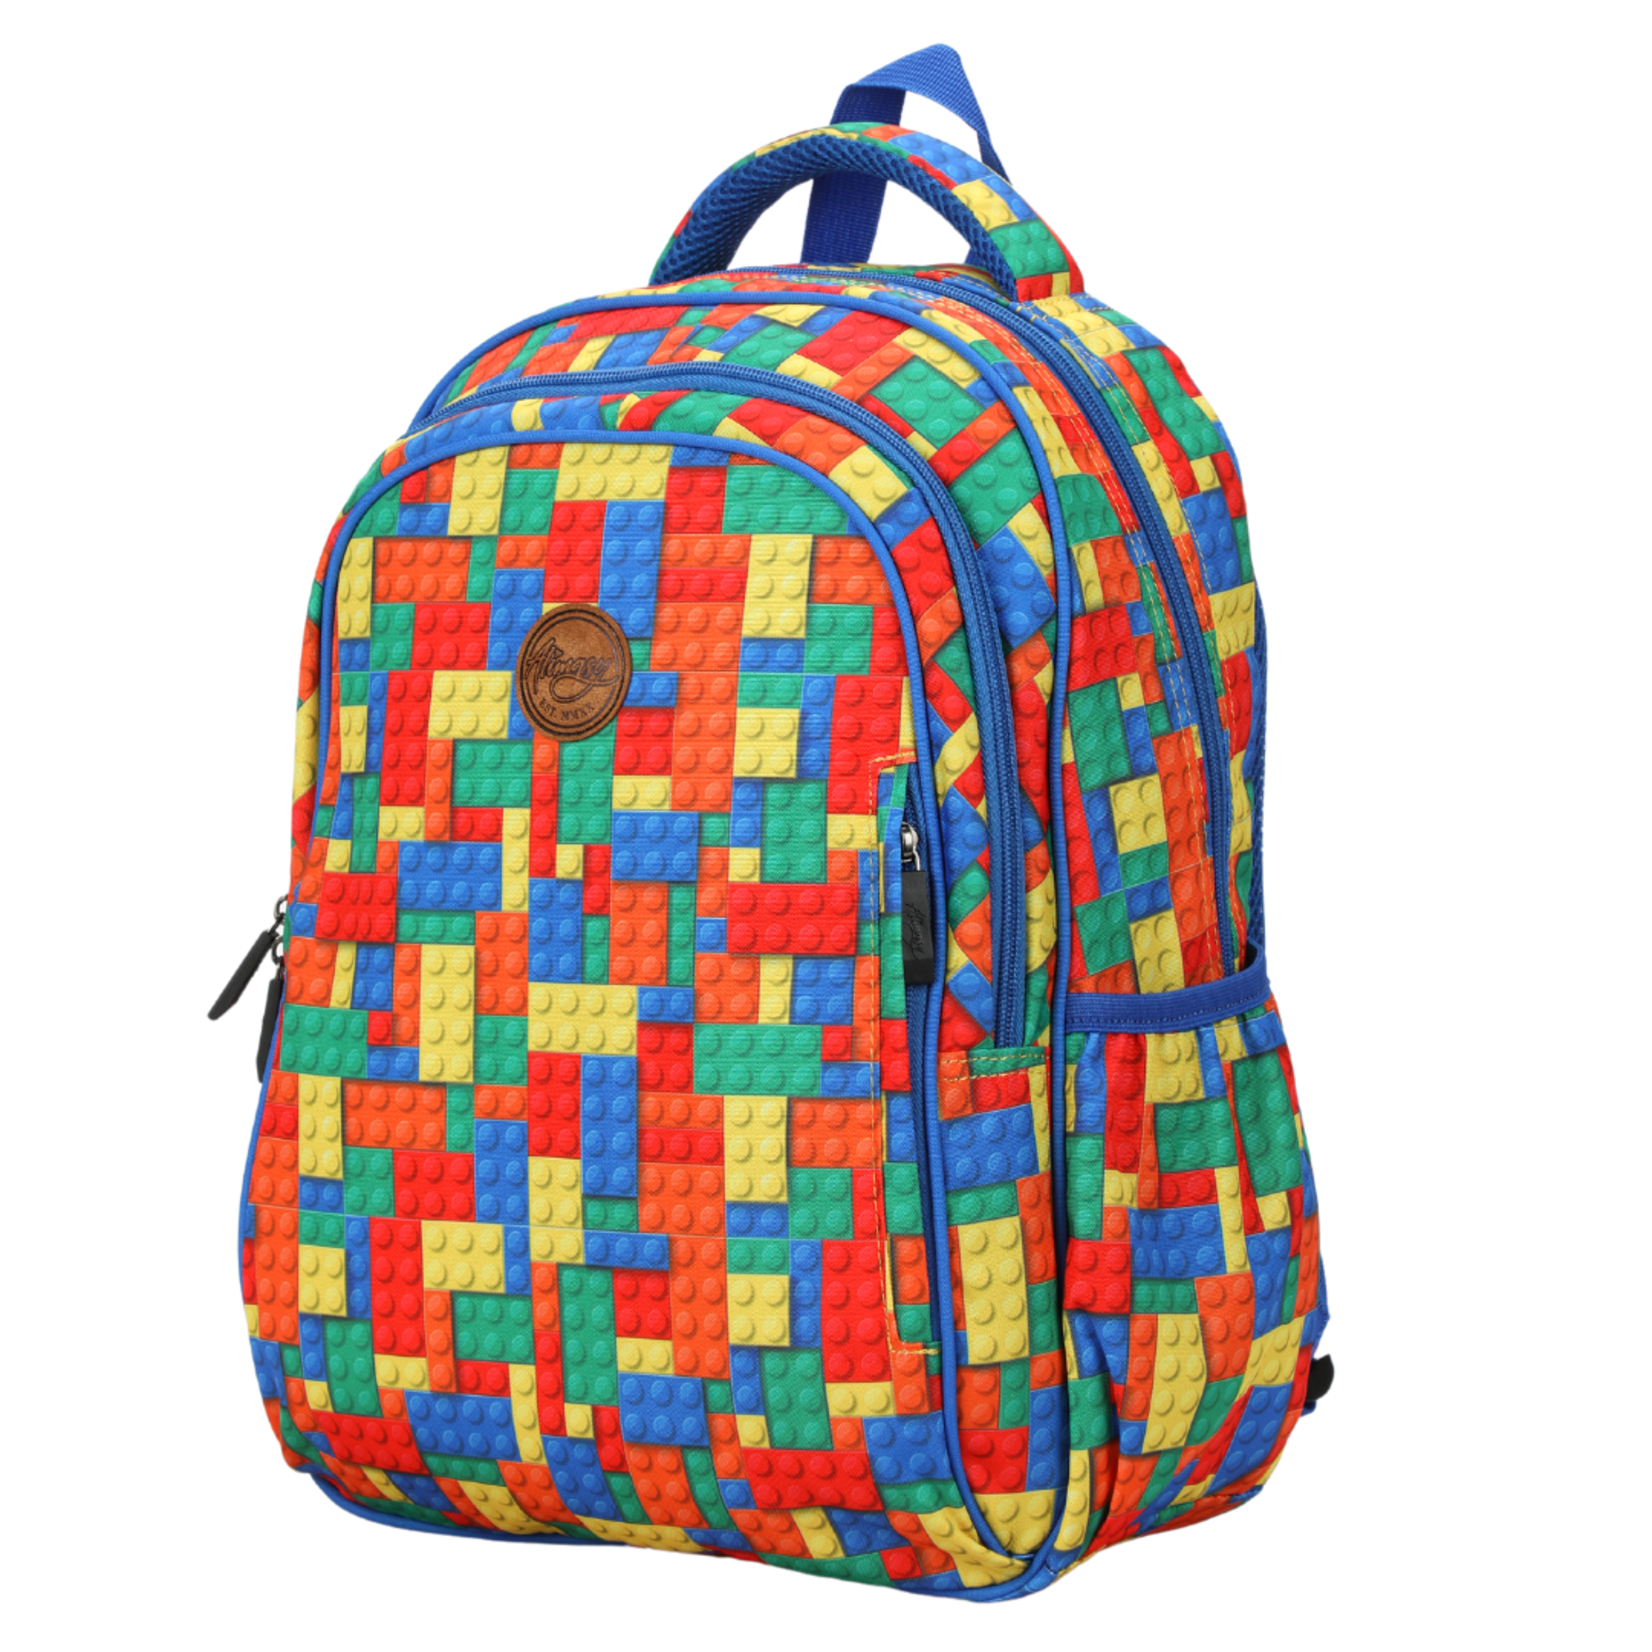 Alimasy Bricks Midsize Backpack